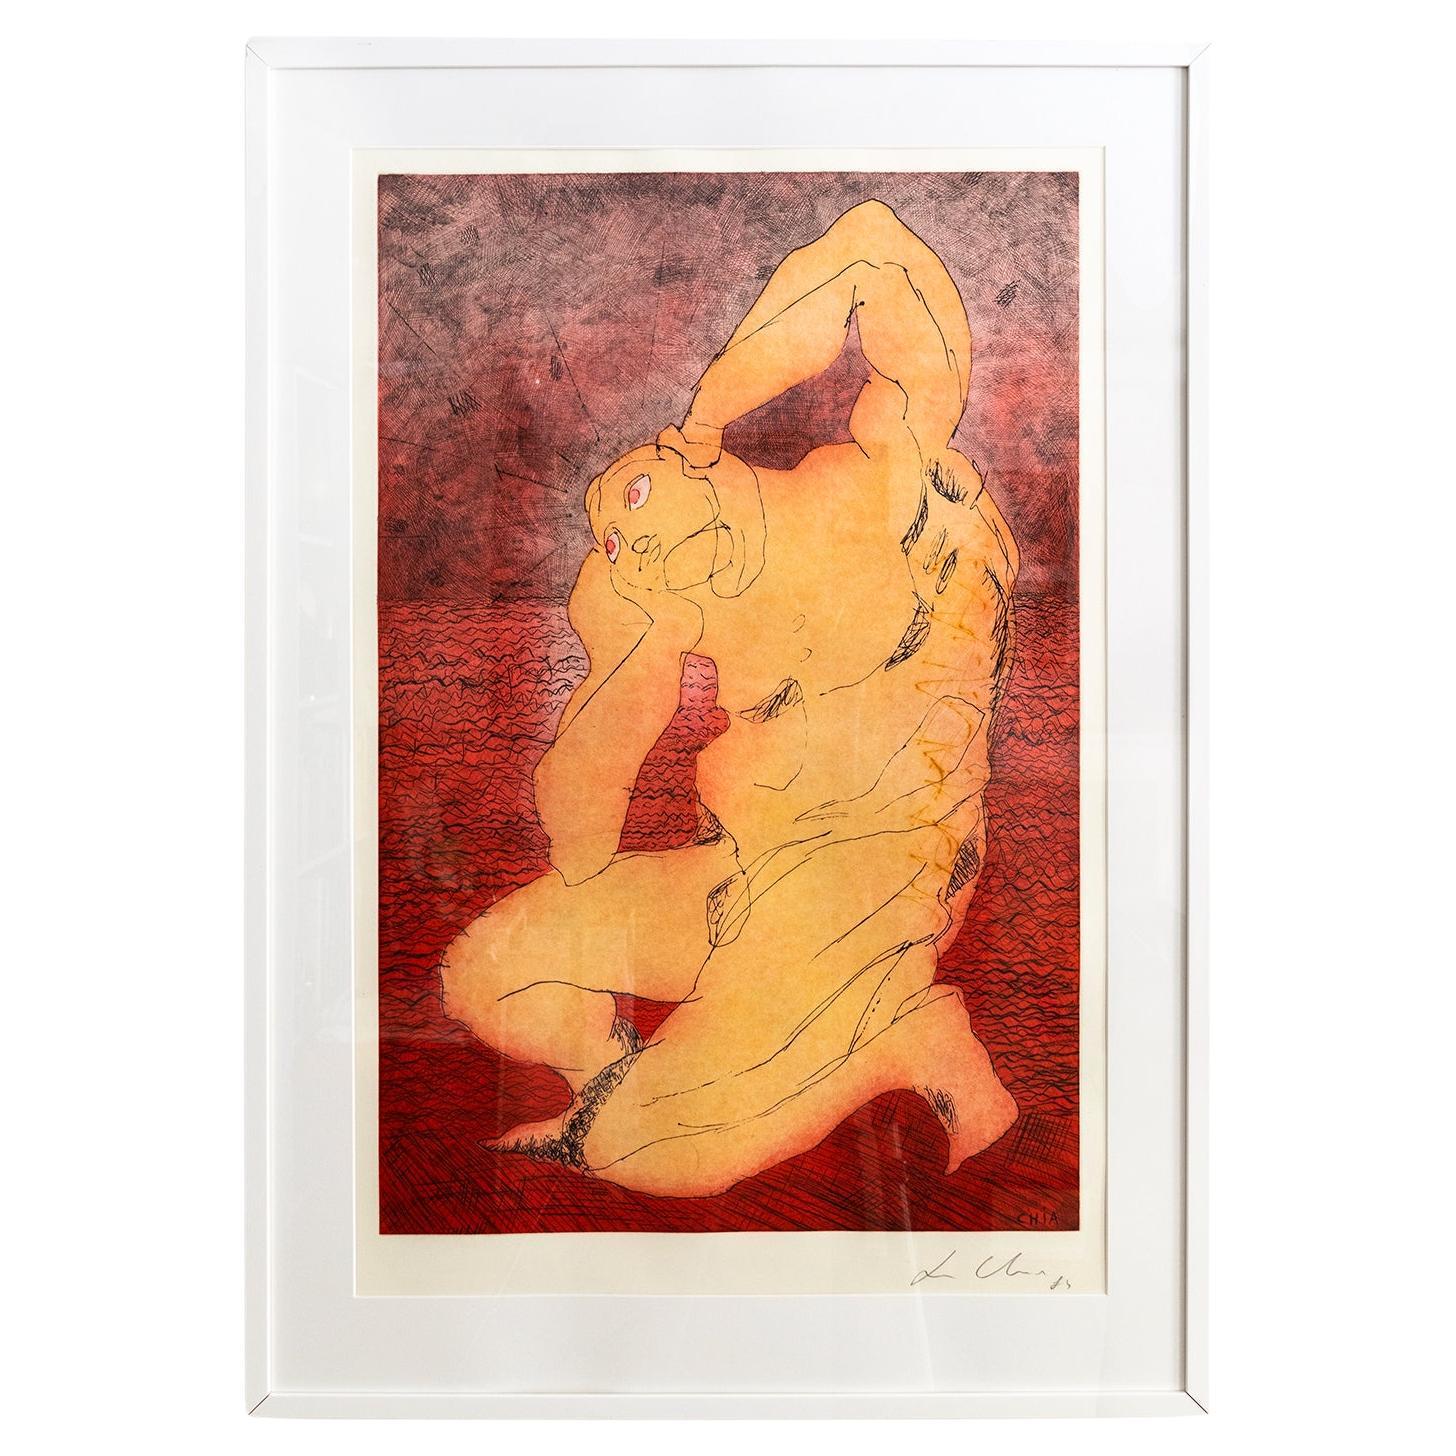 Sandro Chia Aquatint Print in Red & Yellow, "Man & Sea" Post Modern